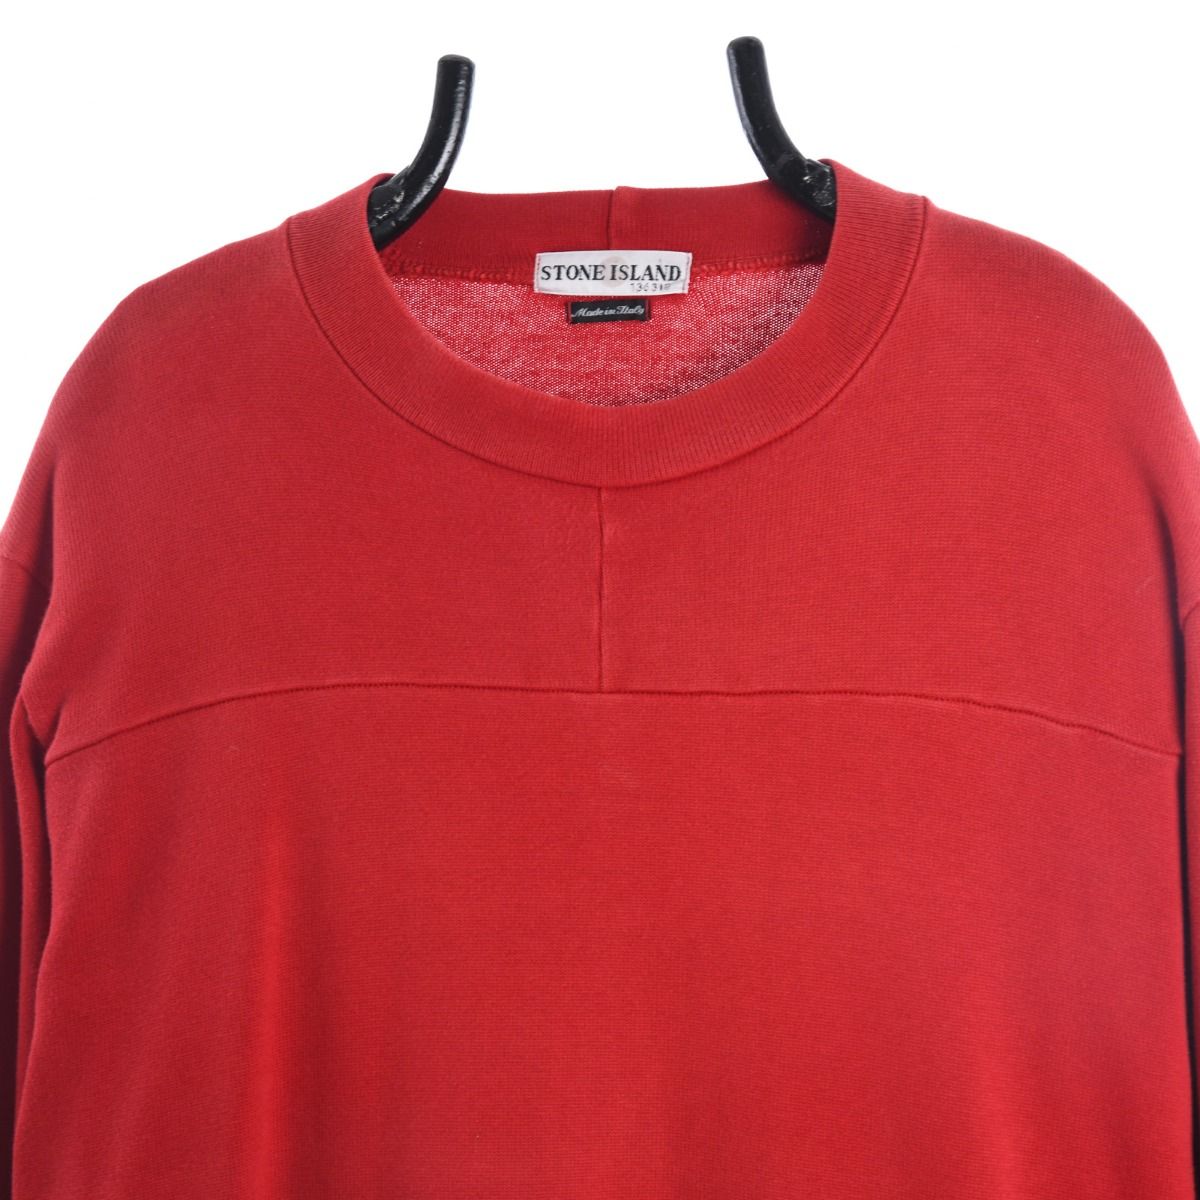 Stone Island A/W 2000 Red Sweatshirt